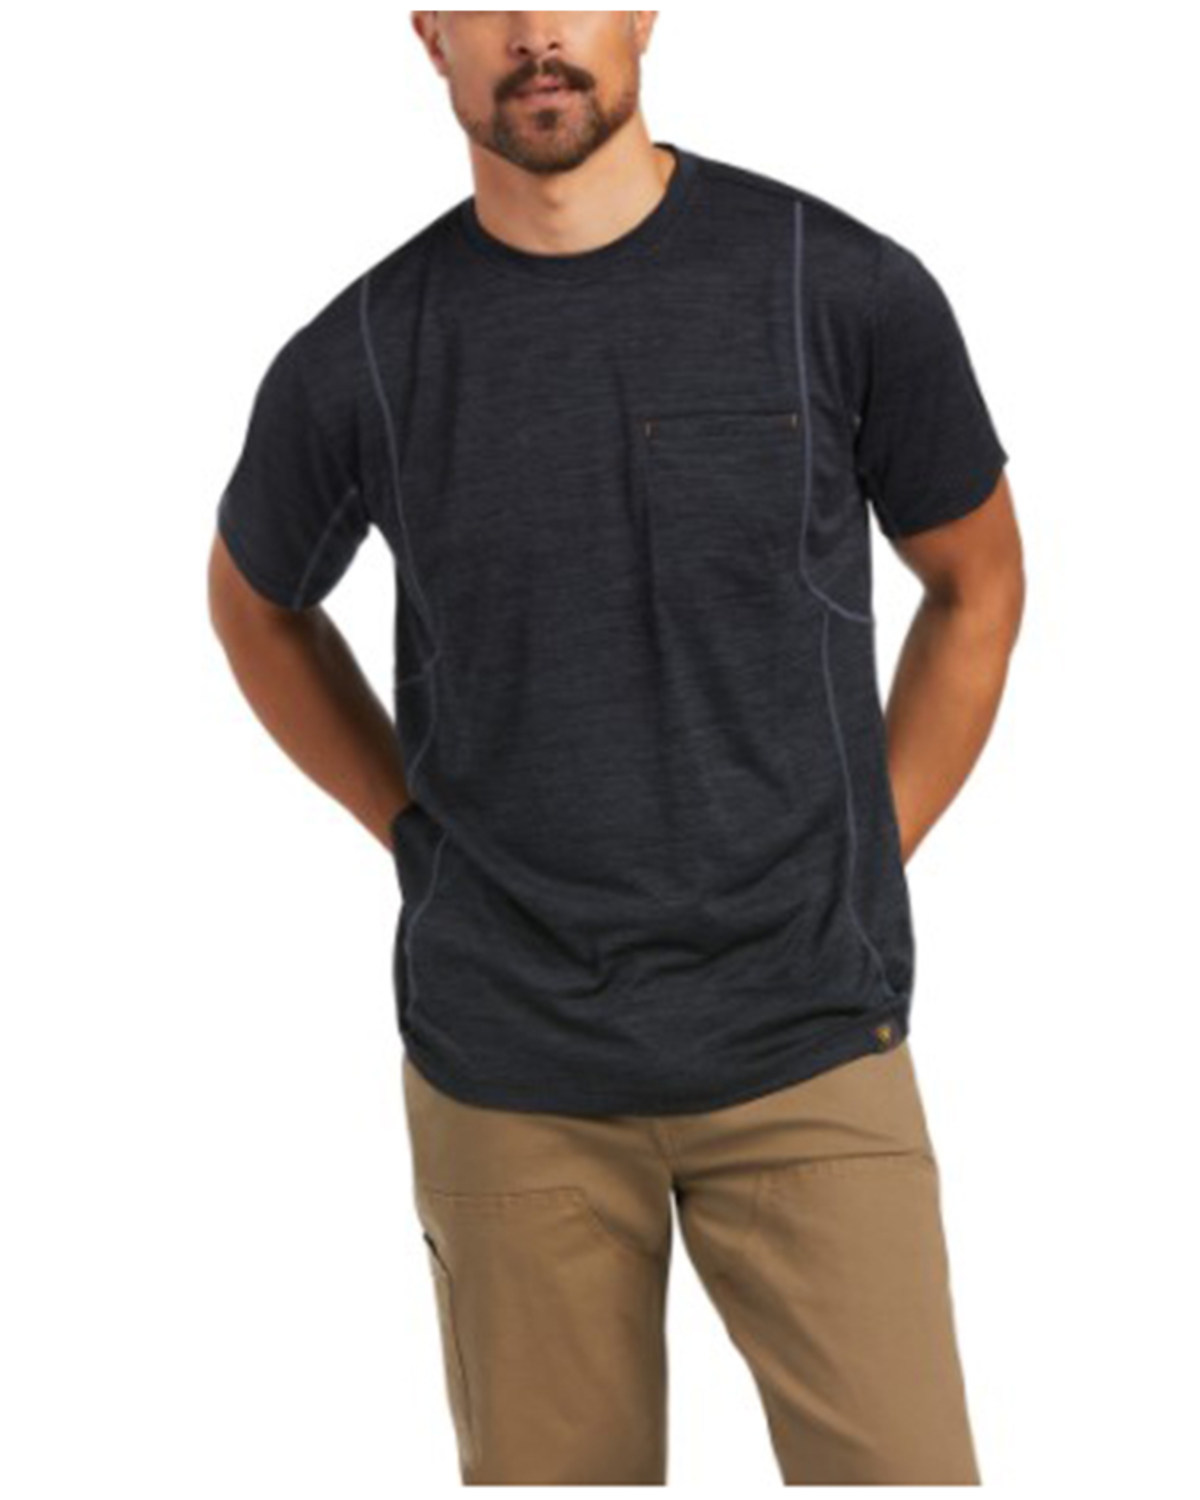 Ariat Men's Rebar Revolt Athletic Fit Work Pocket T-Shirt